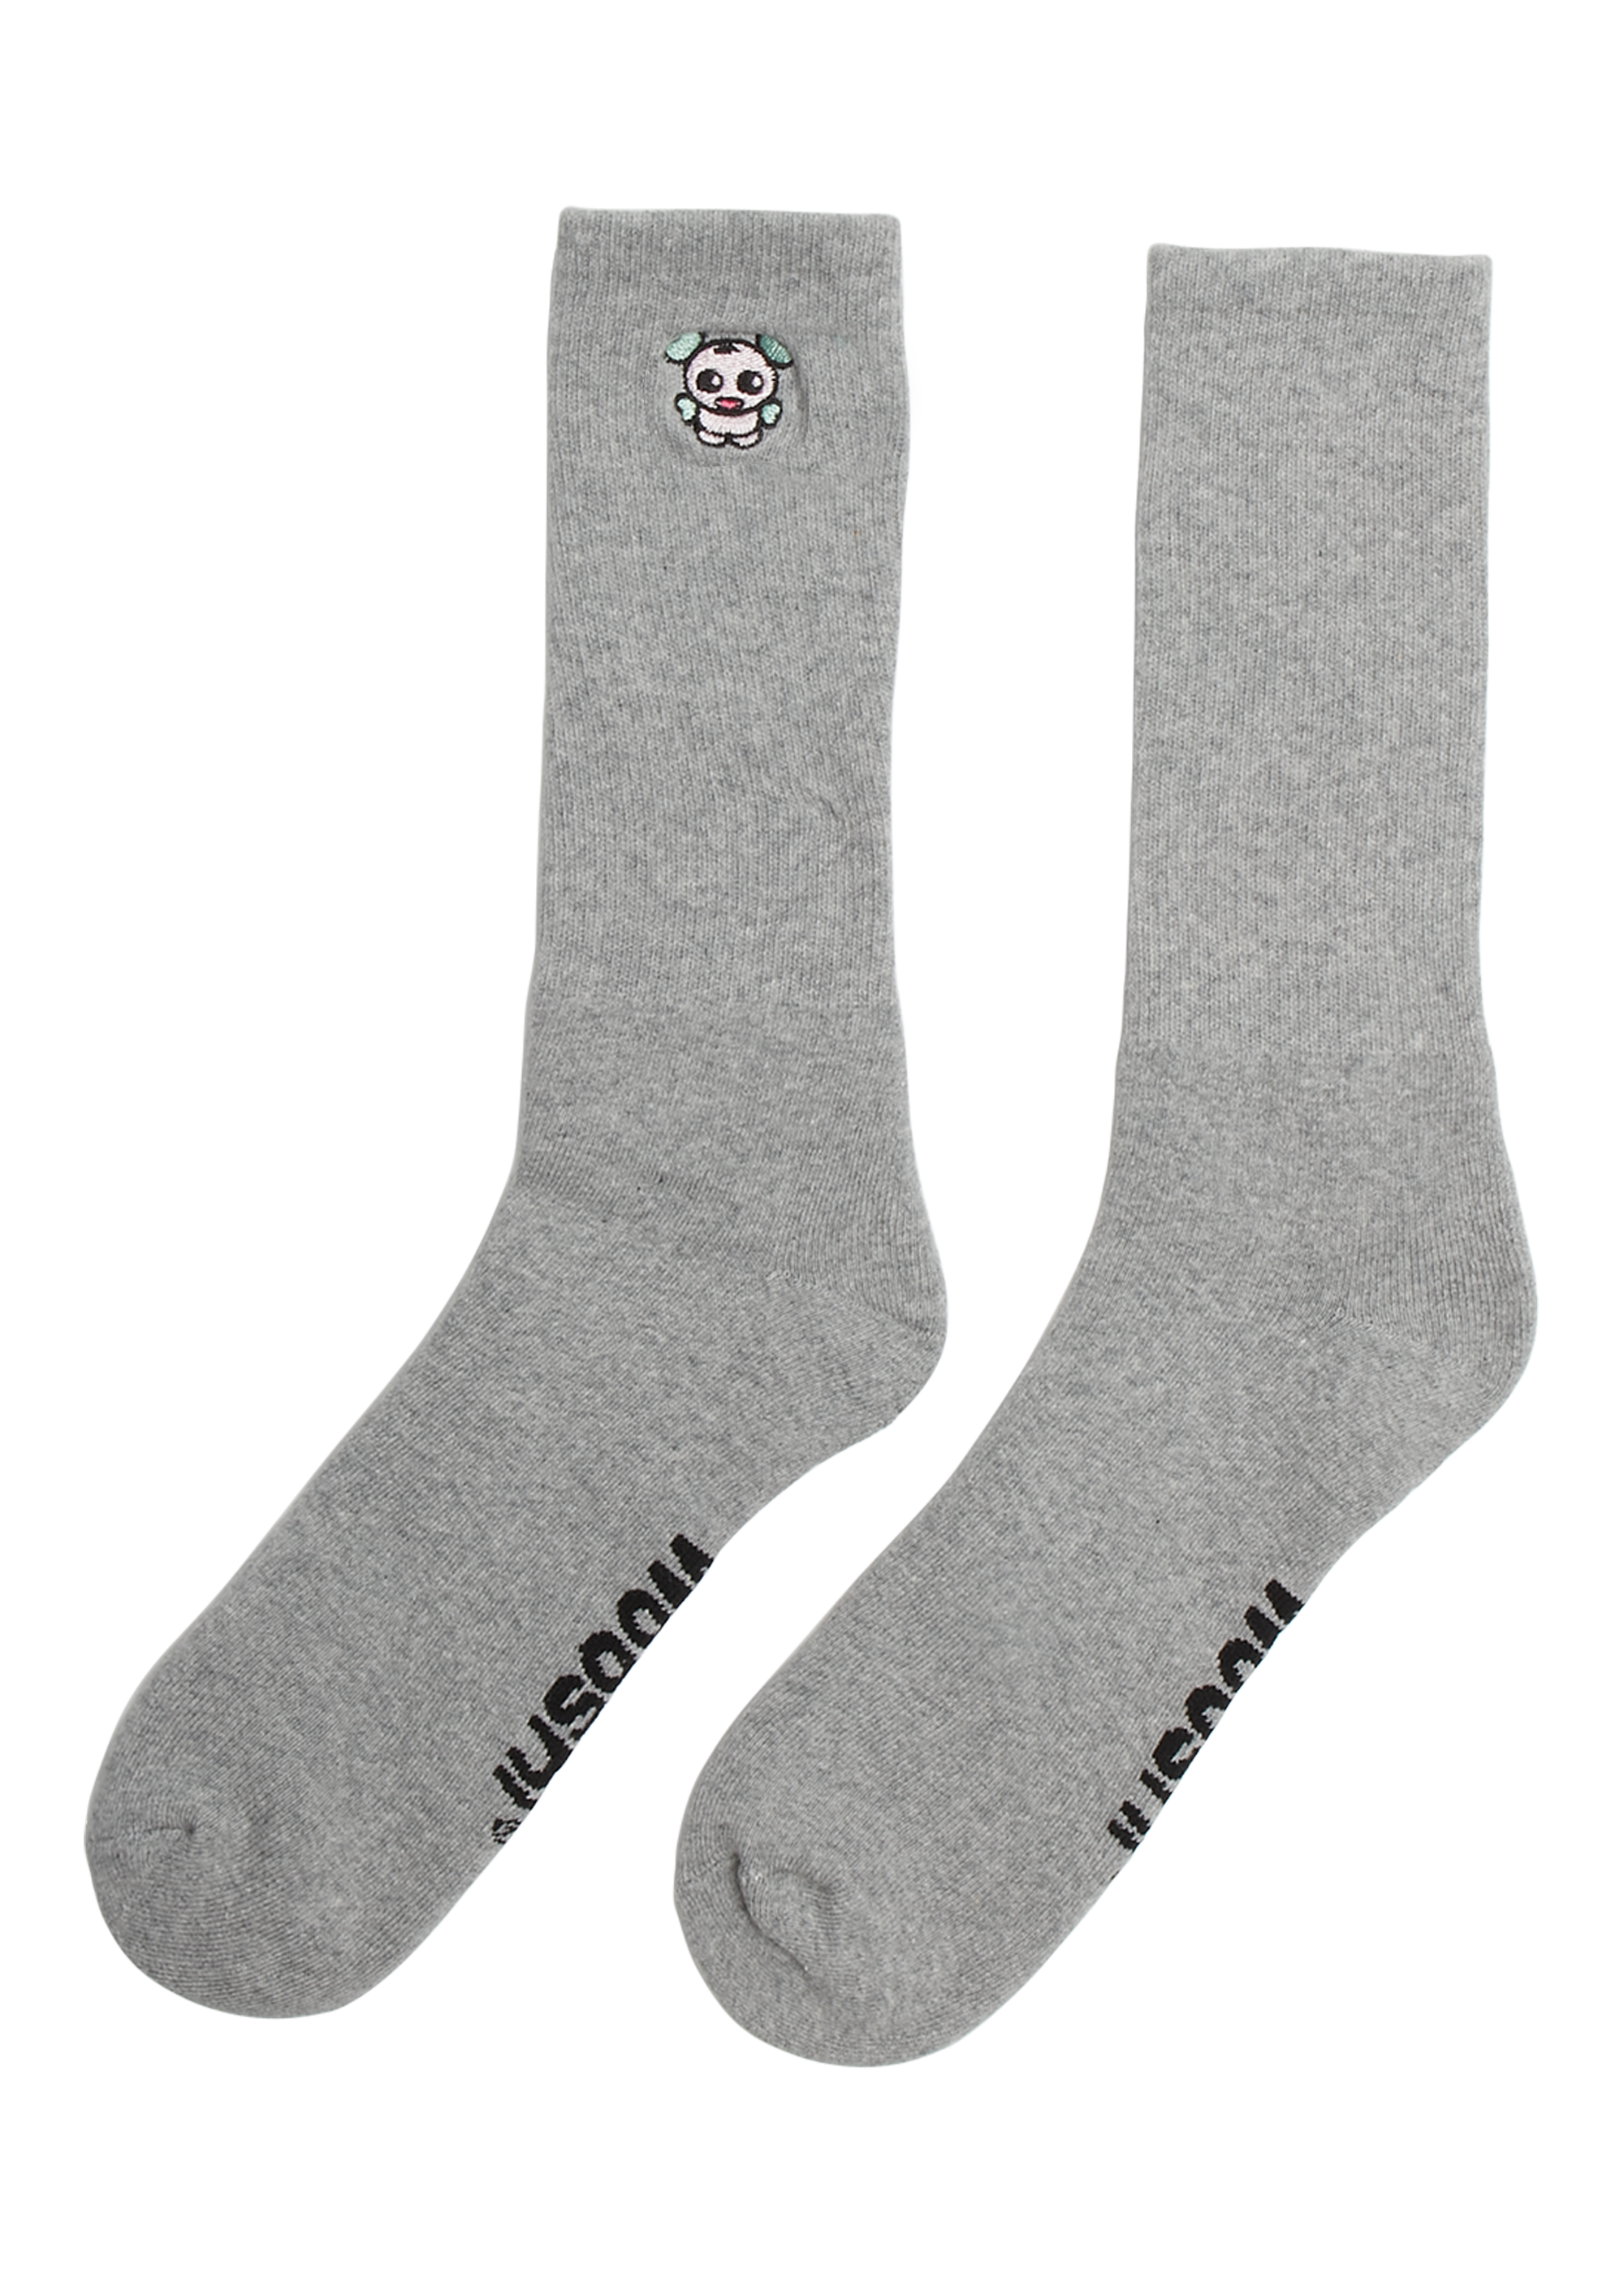 Wooshi Grey Embroidered Socks - H4X